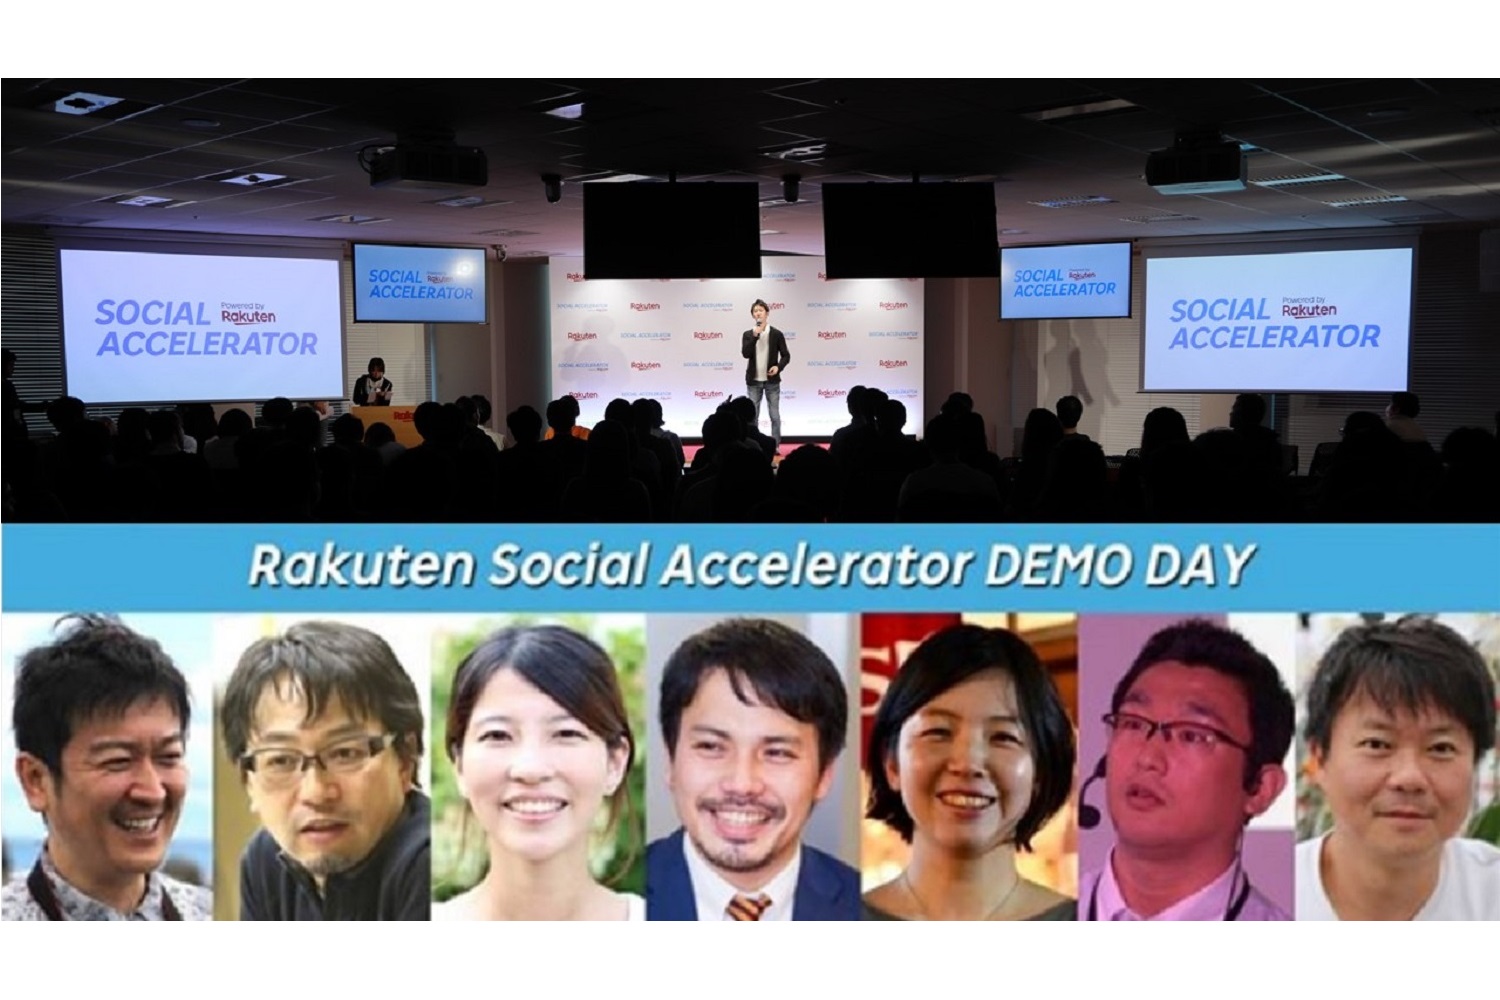 Rakuten Social Accelerator 成果発表会レポート 後編 社会 そして人々をエンパワーメントする楽天の試み 楽天 グループ株式会社